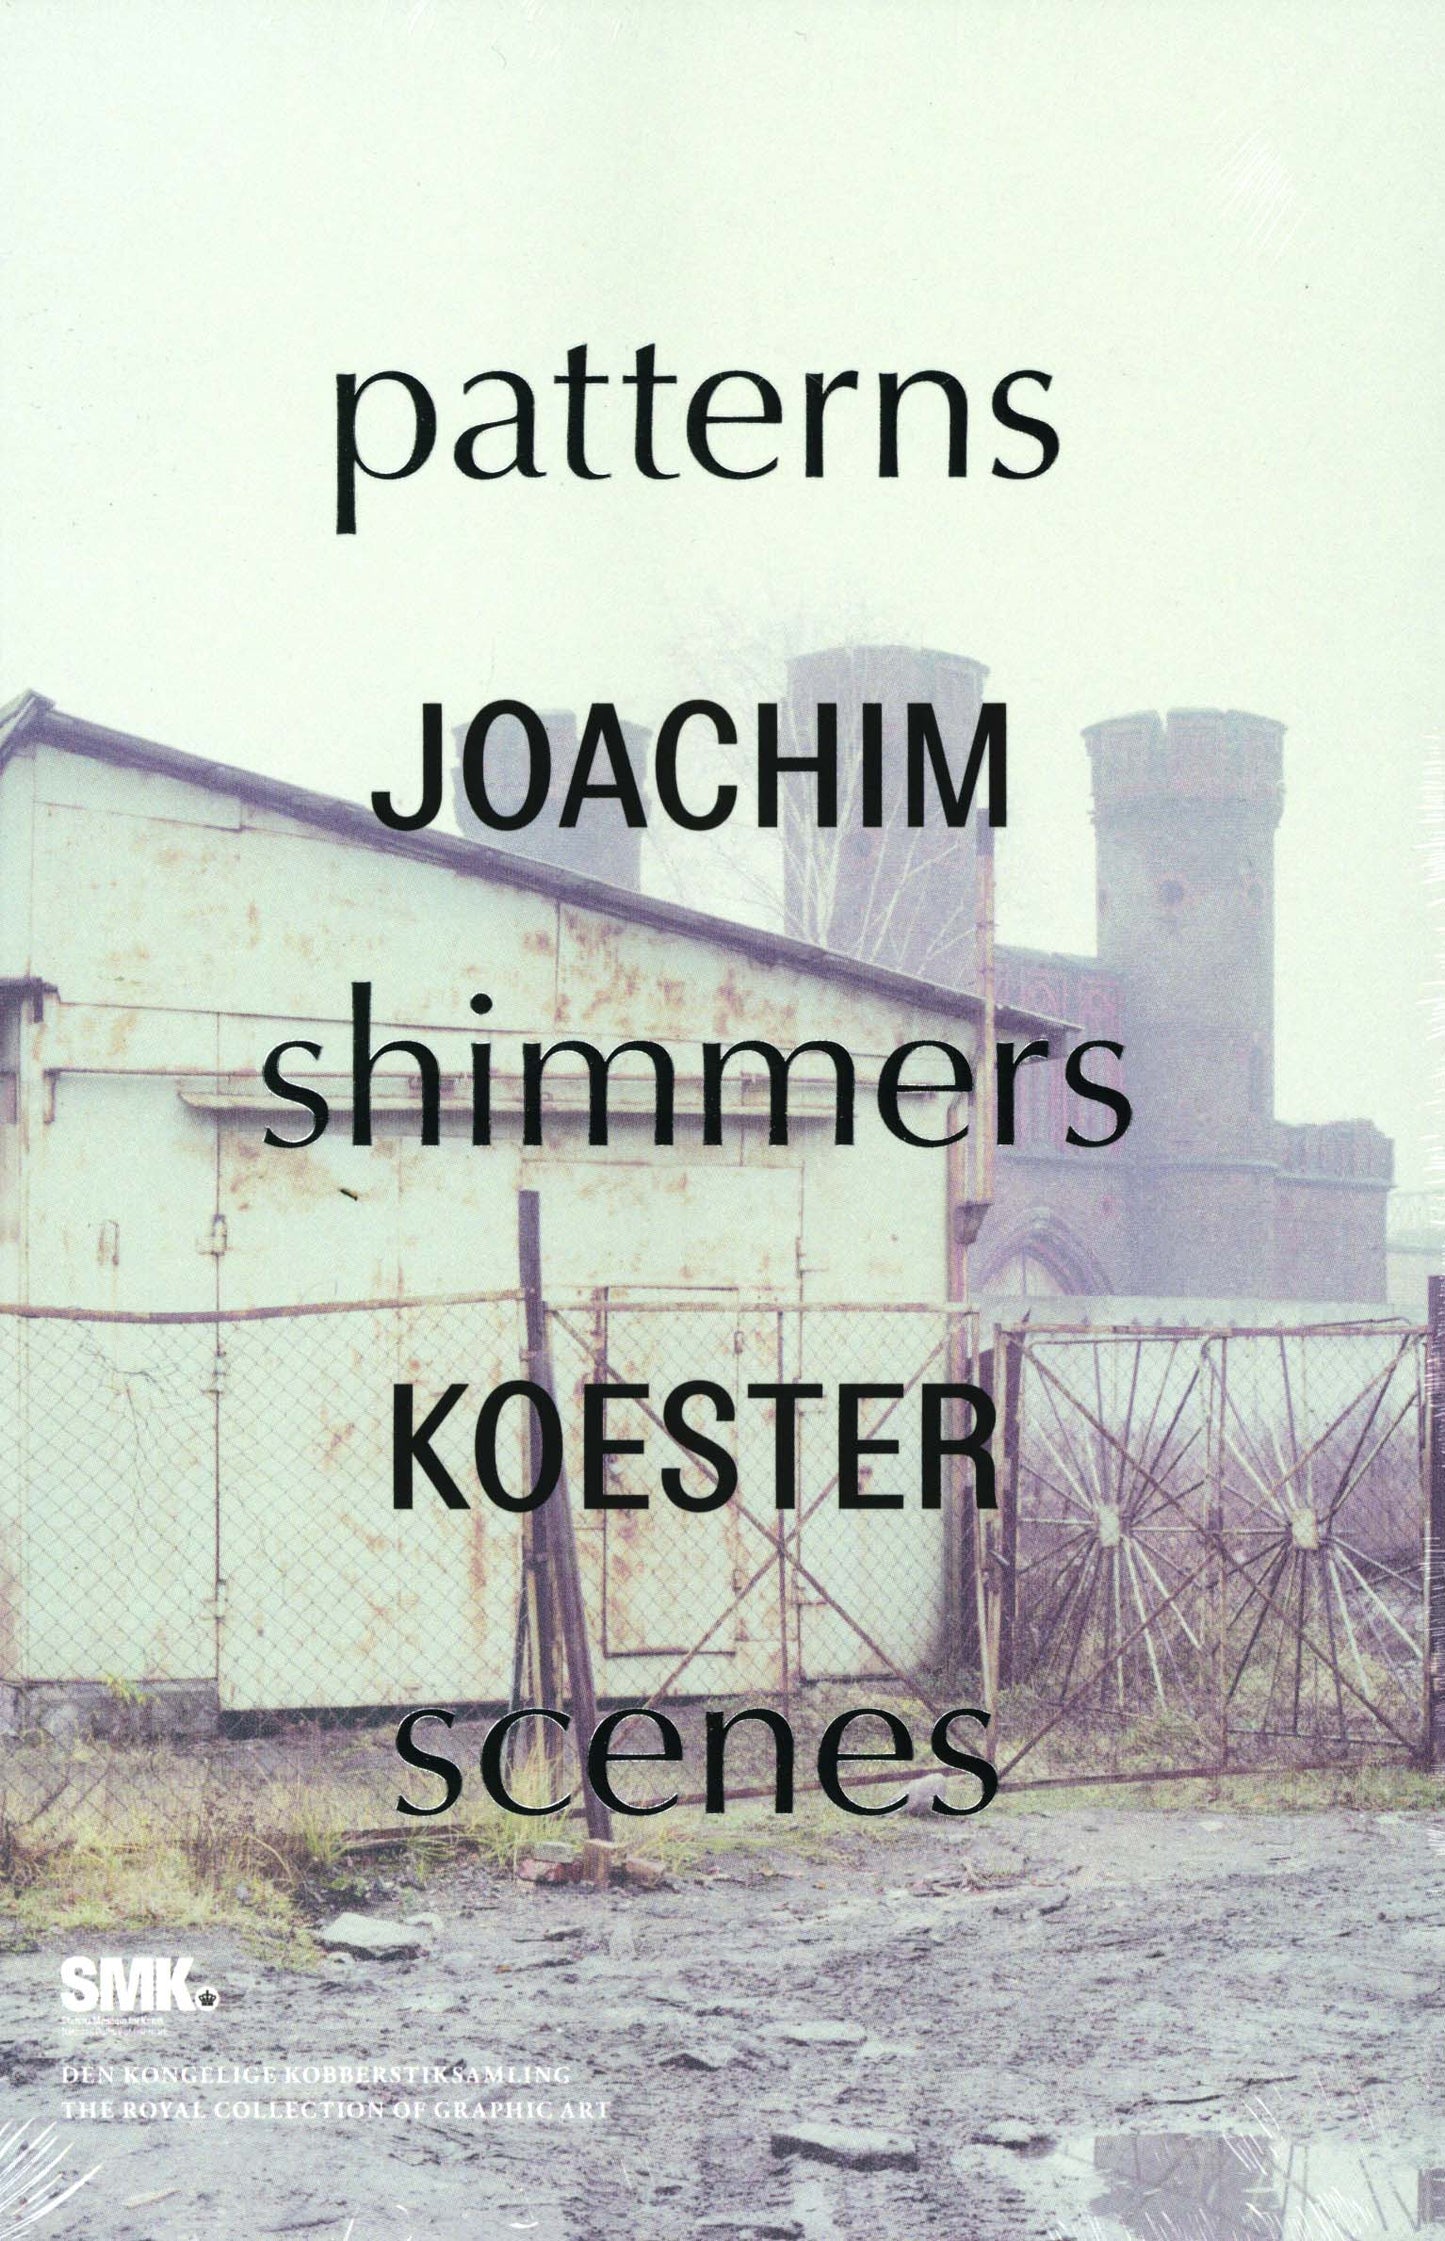 Joachim Koester. Patterns Shimmers Scenes